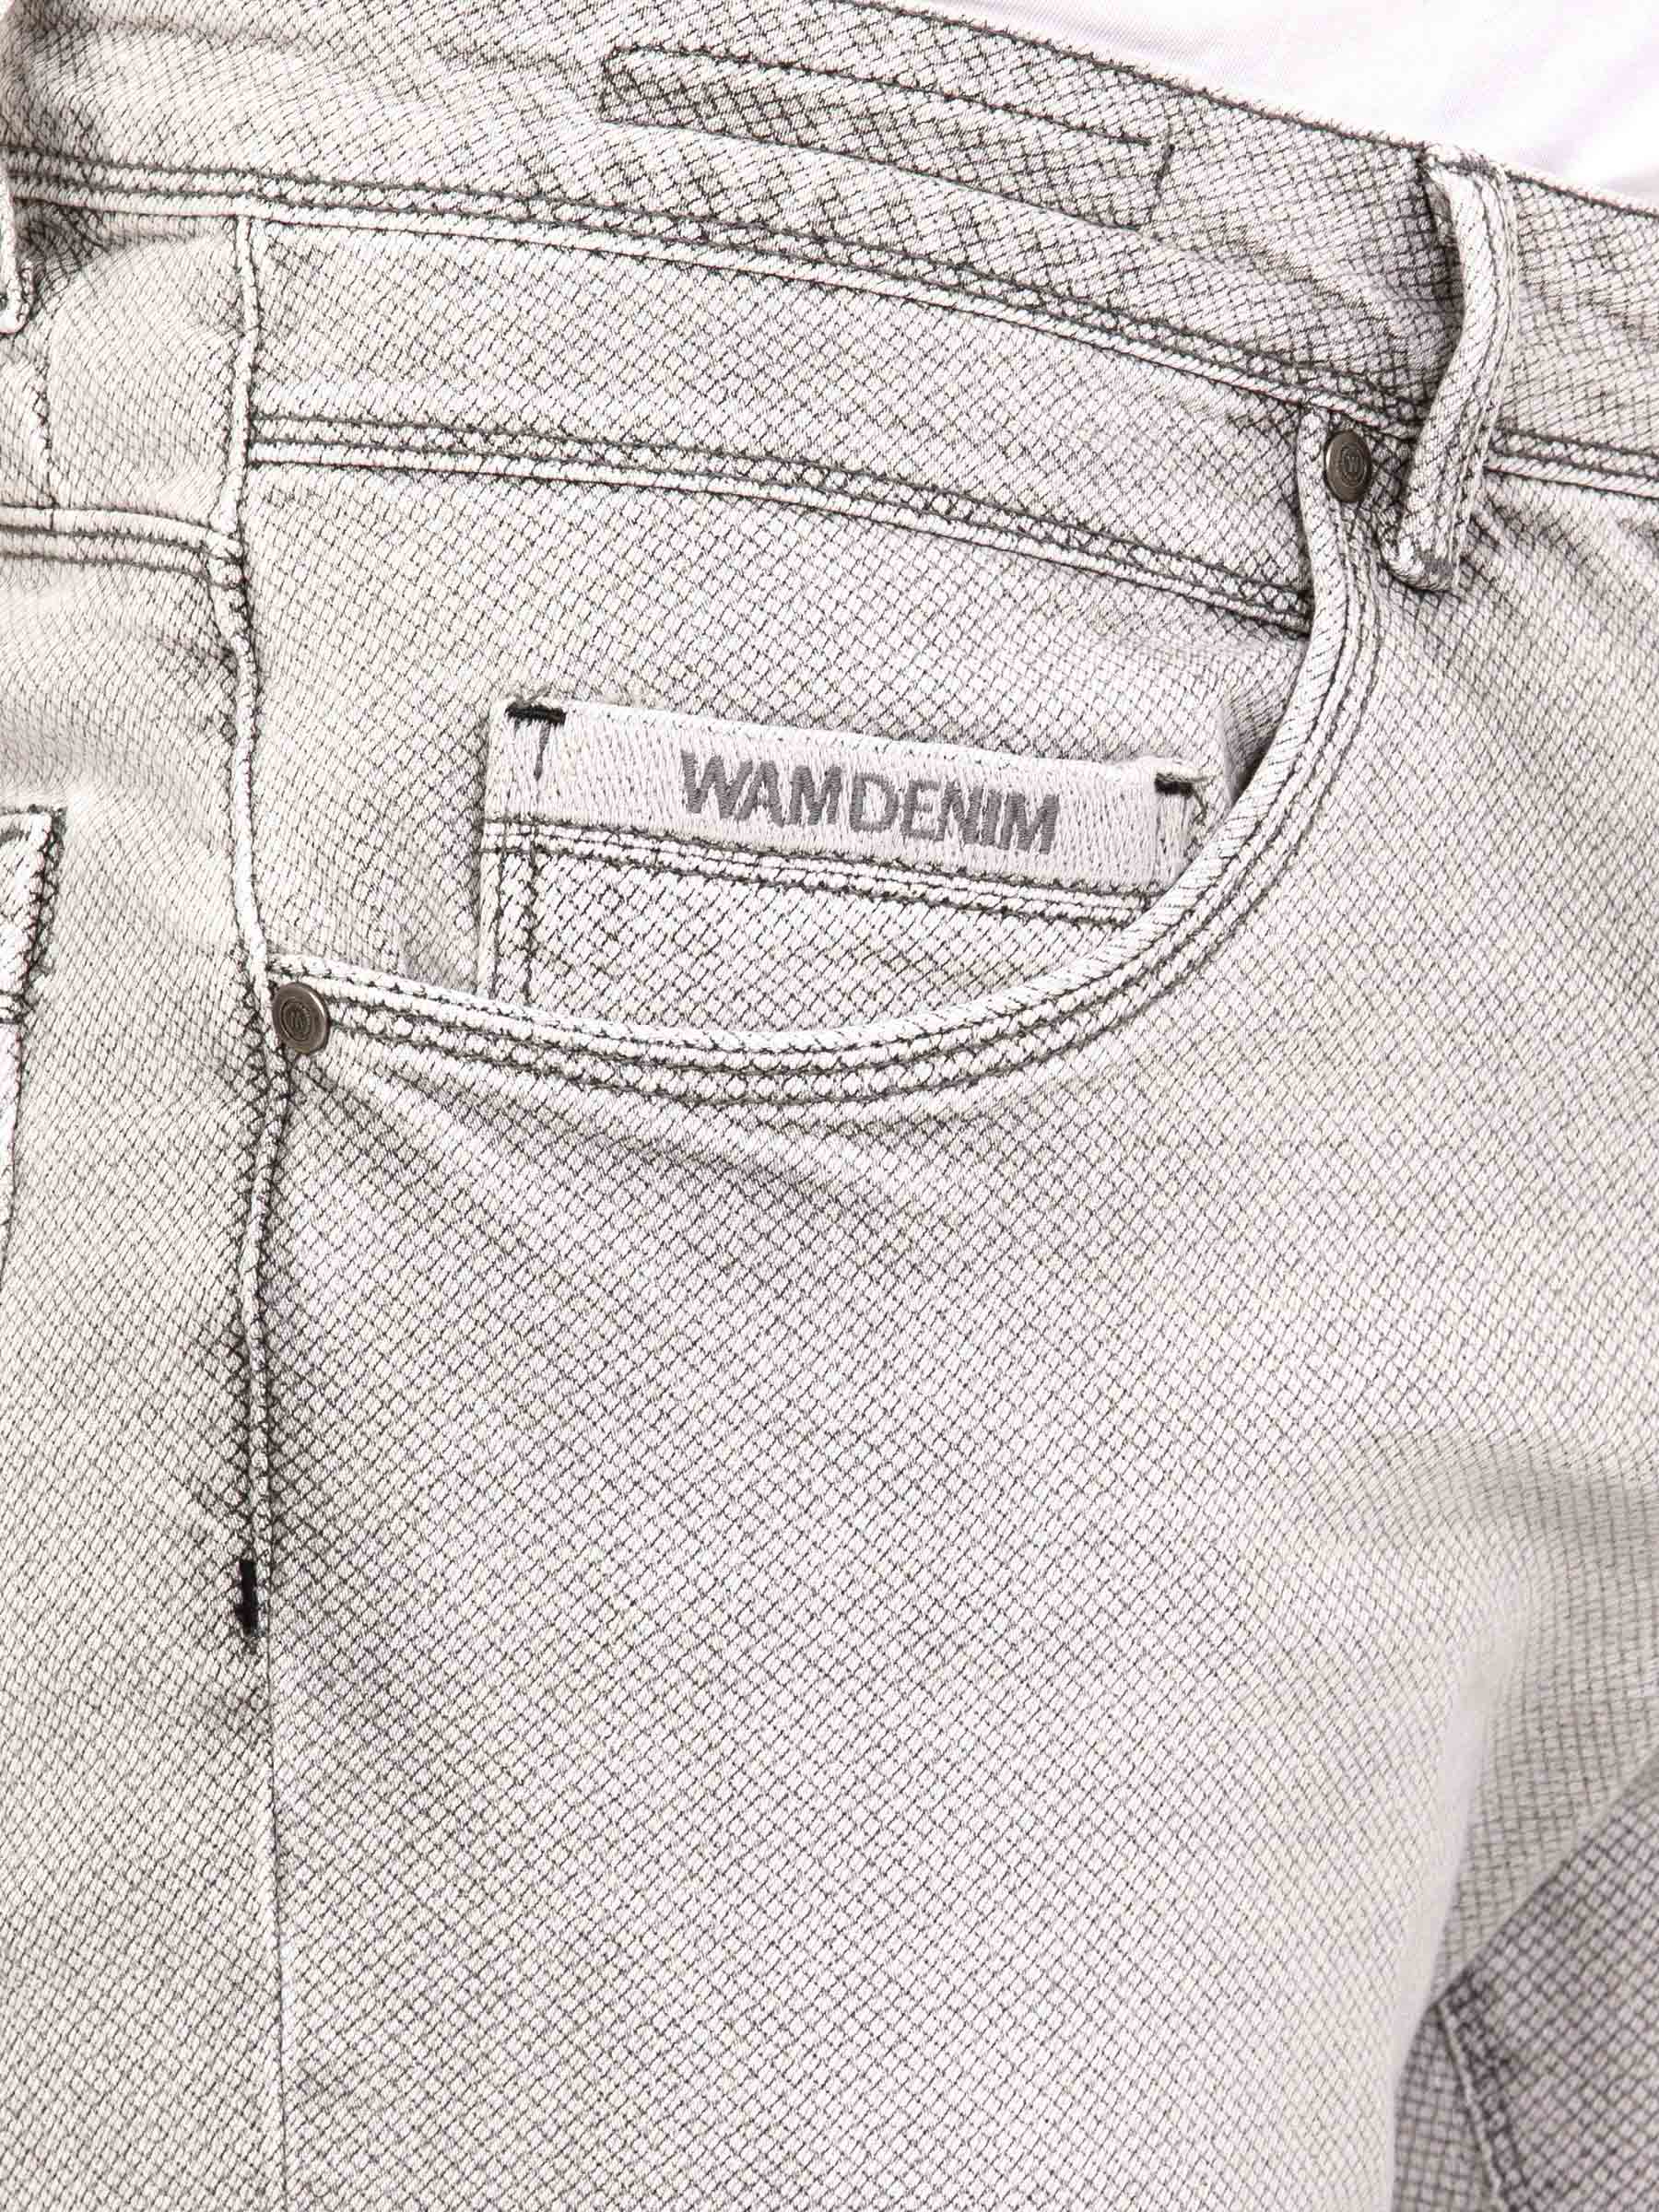 Hanneman Micro Textured Grey Short-38